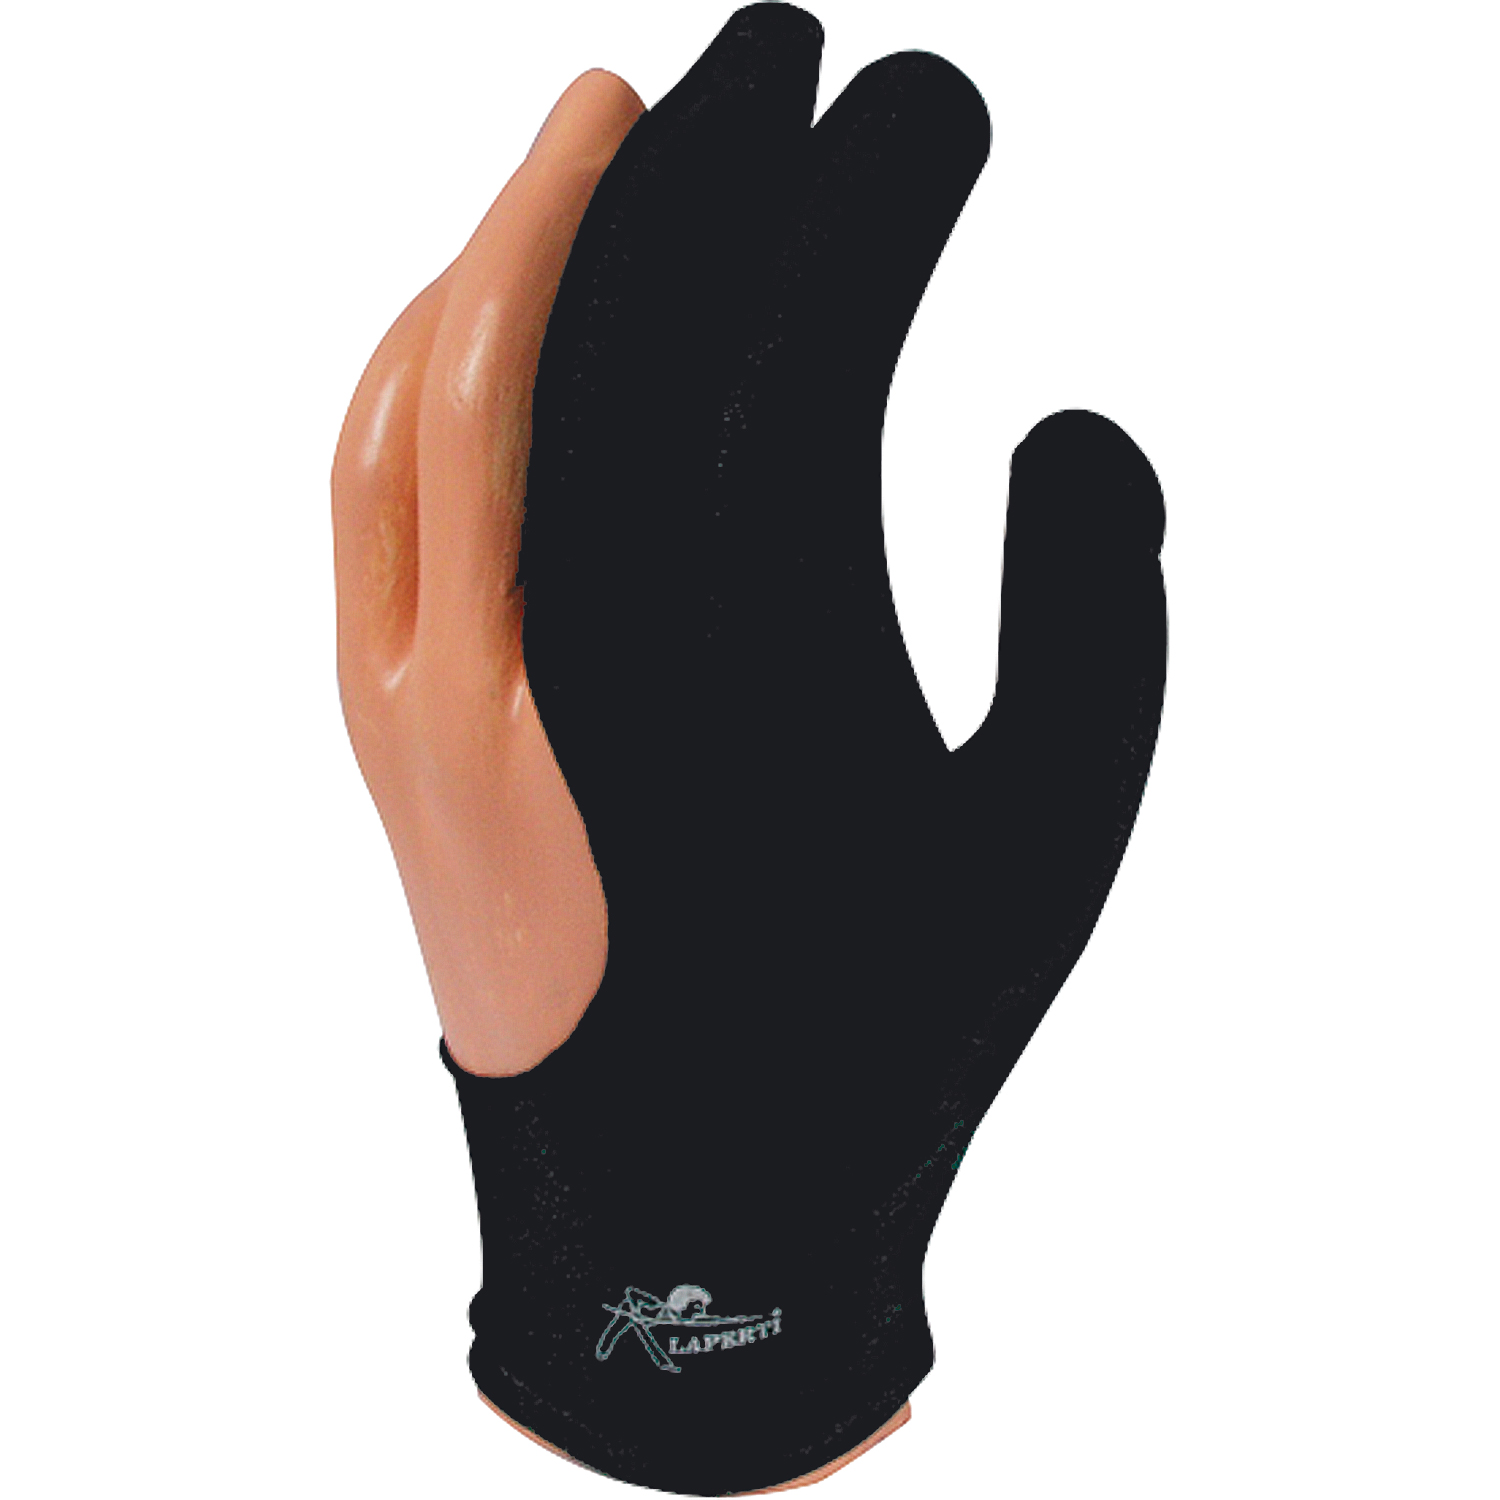 Glove Laperti black, large